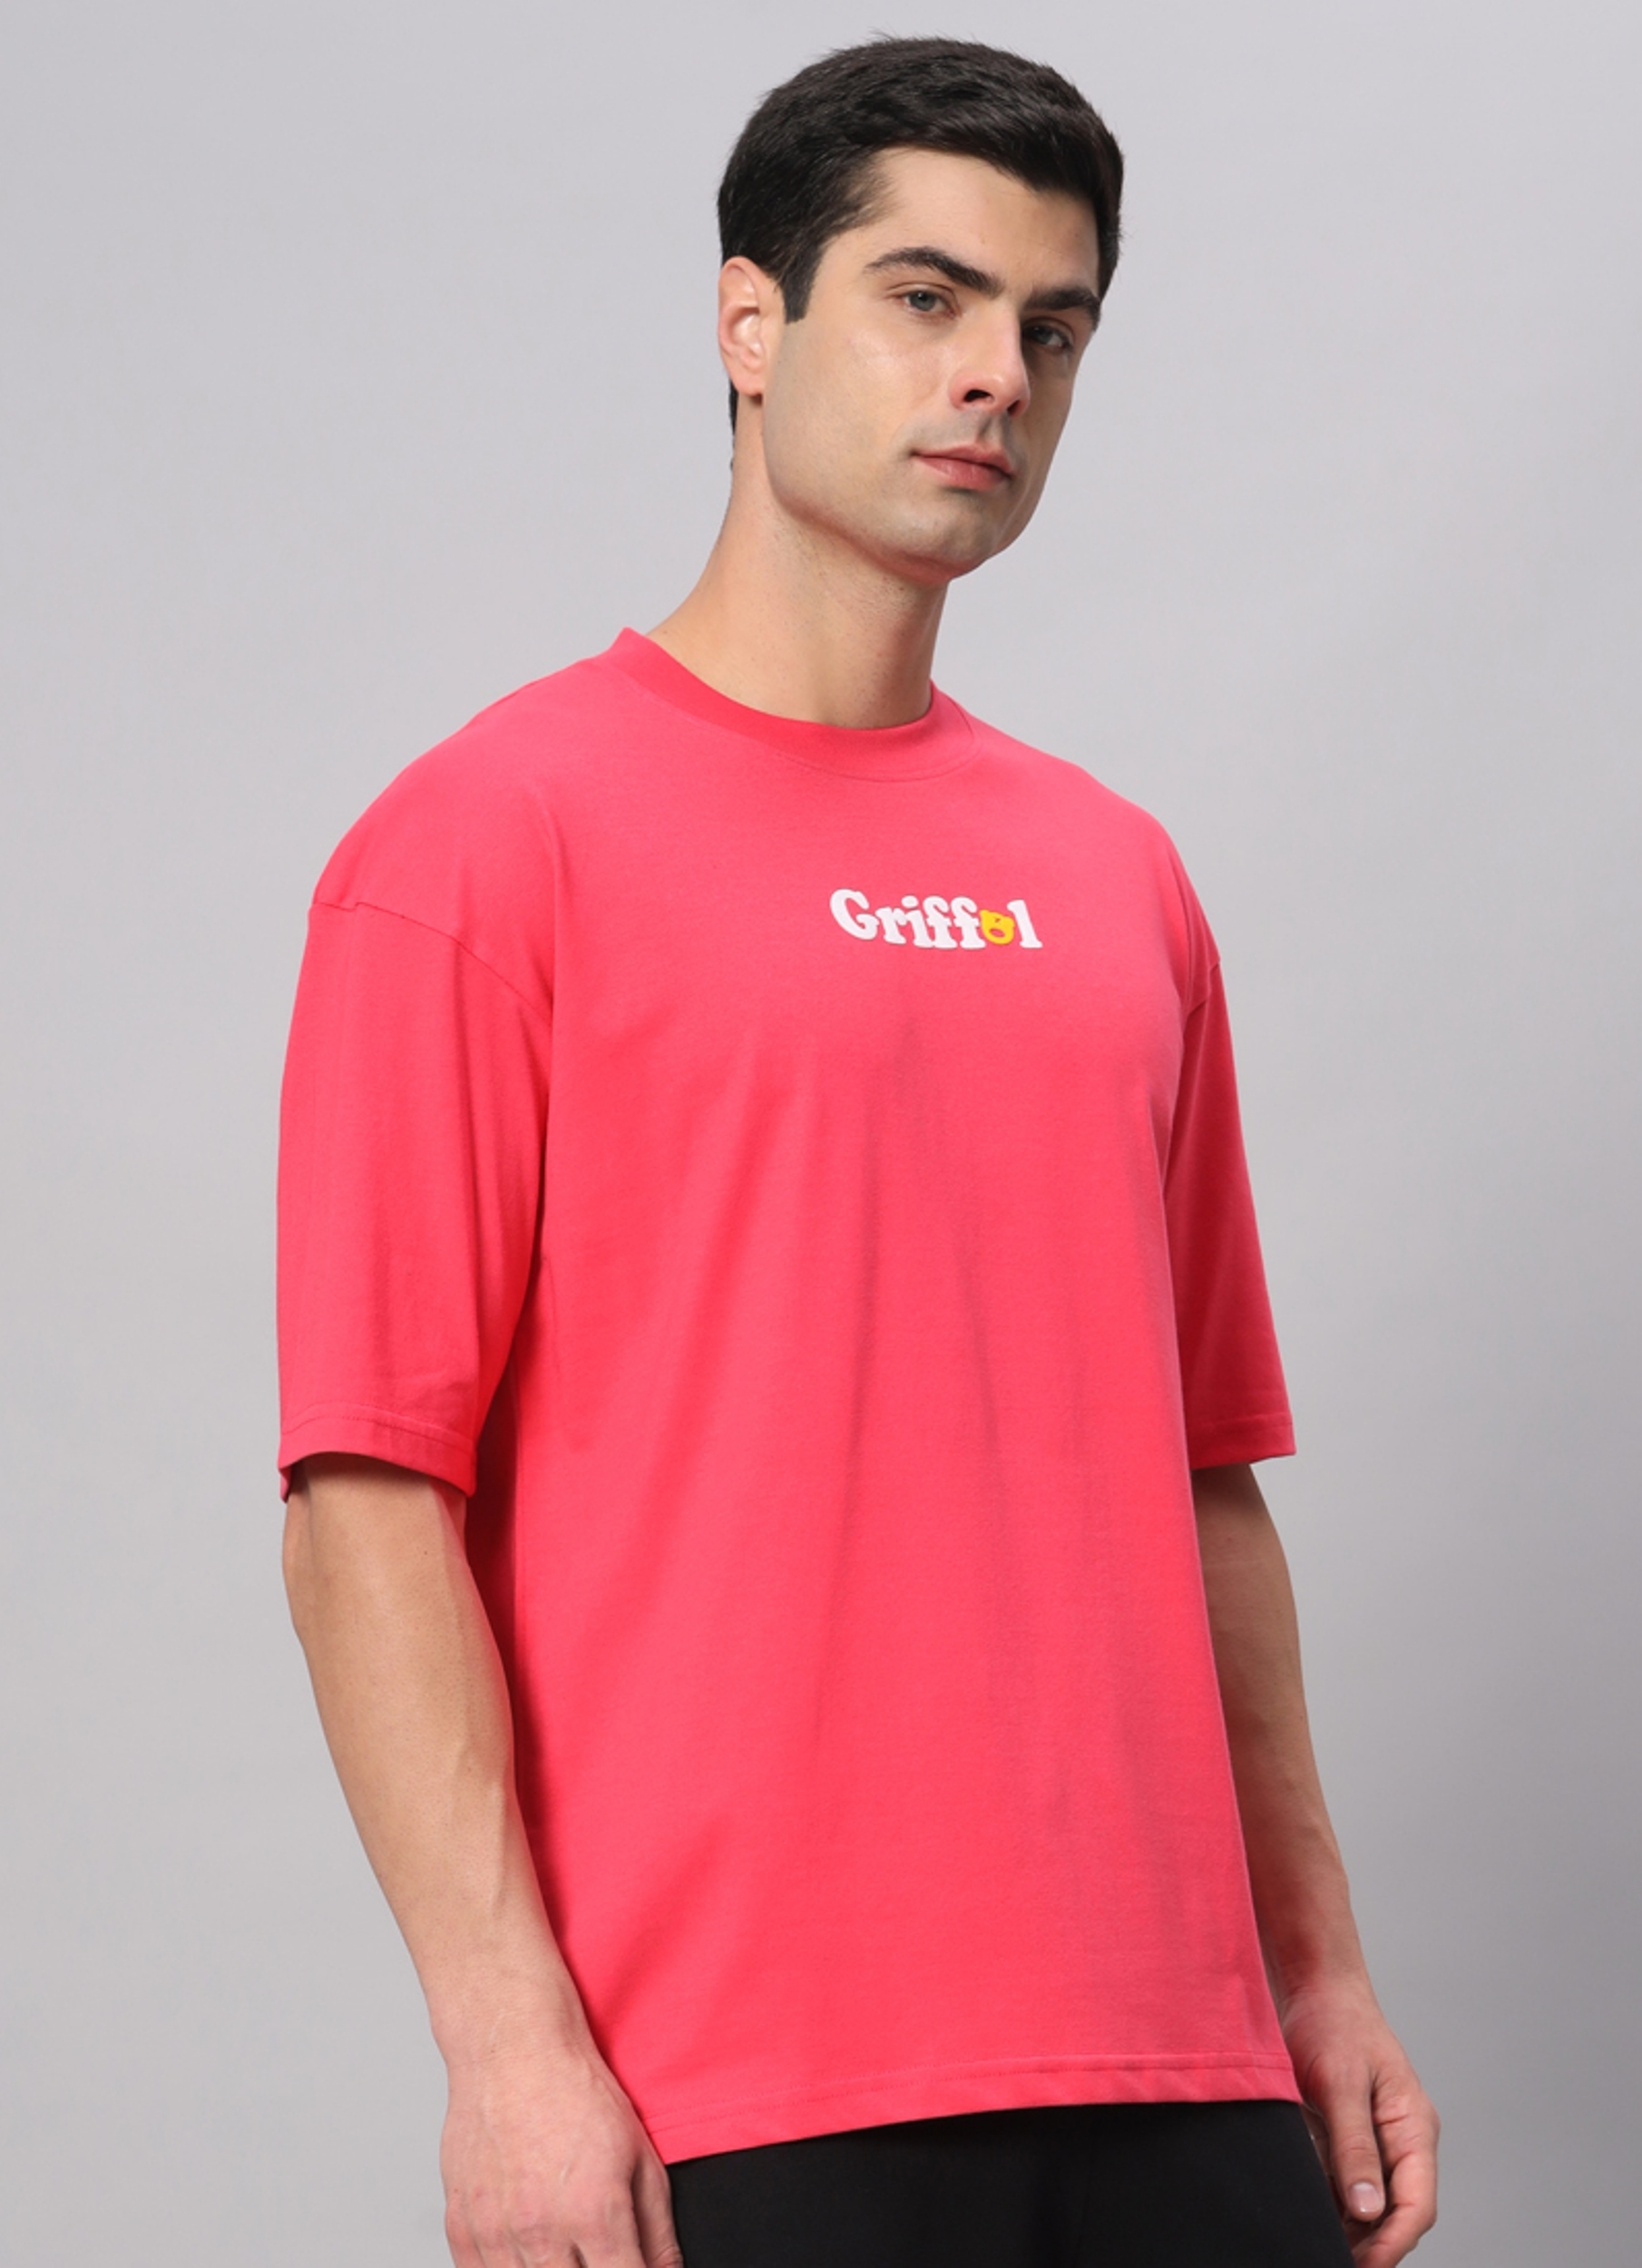 Men's Pink Cotton Loose Printed   Boxy T-Shirt s